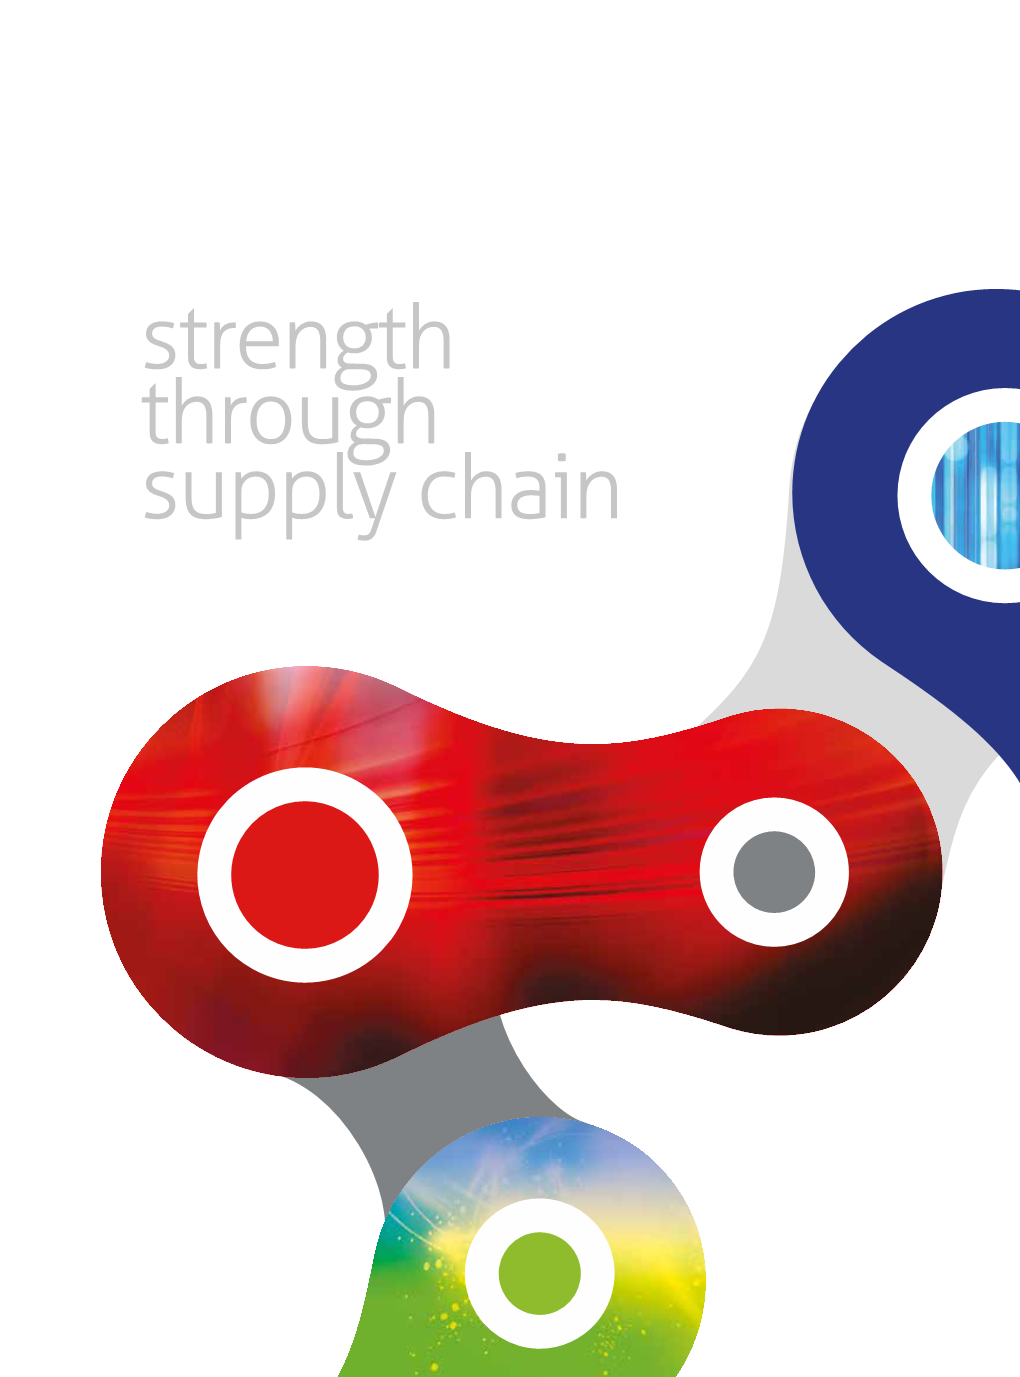 Supply Chain Brochure